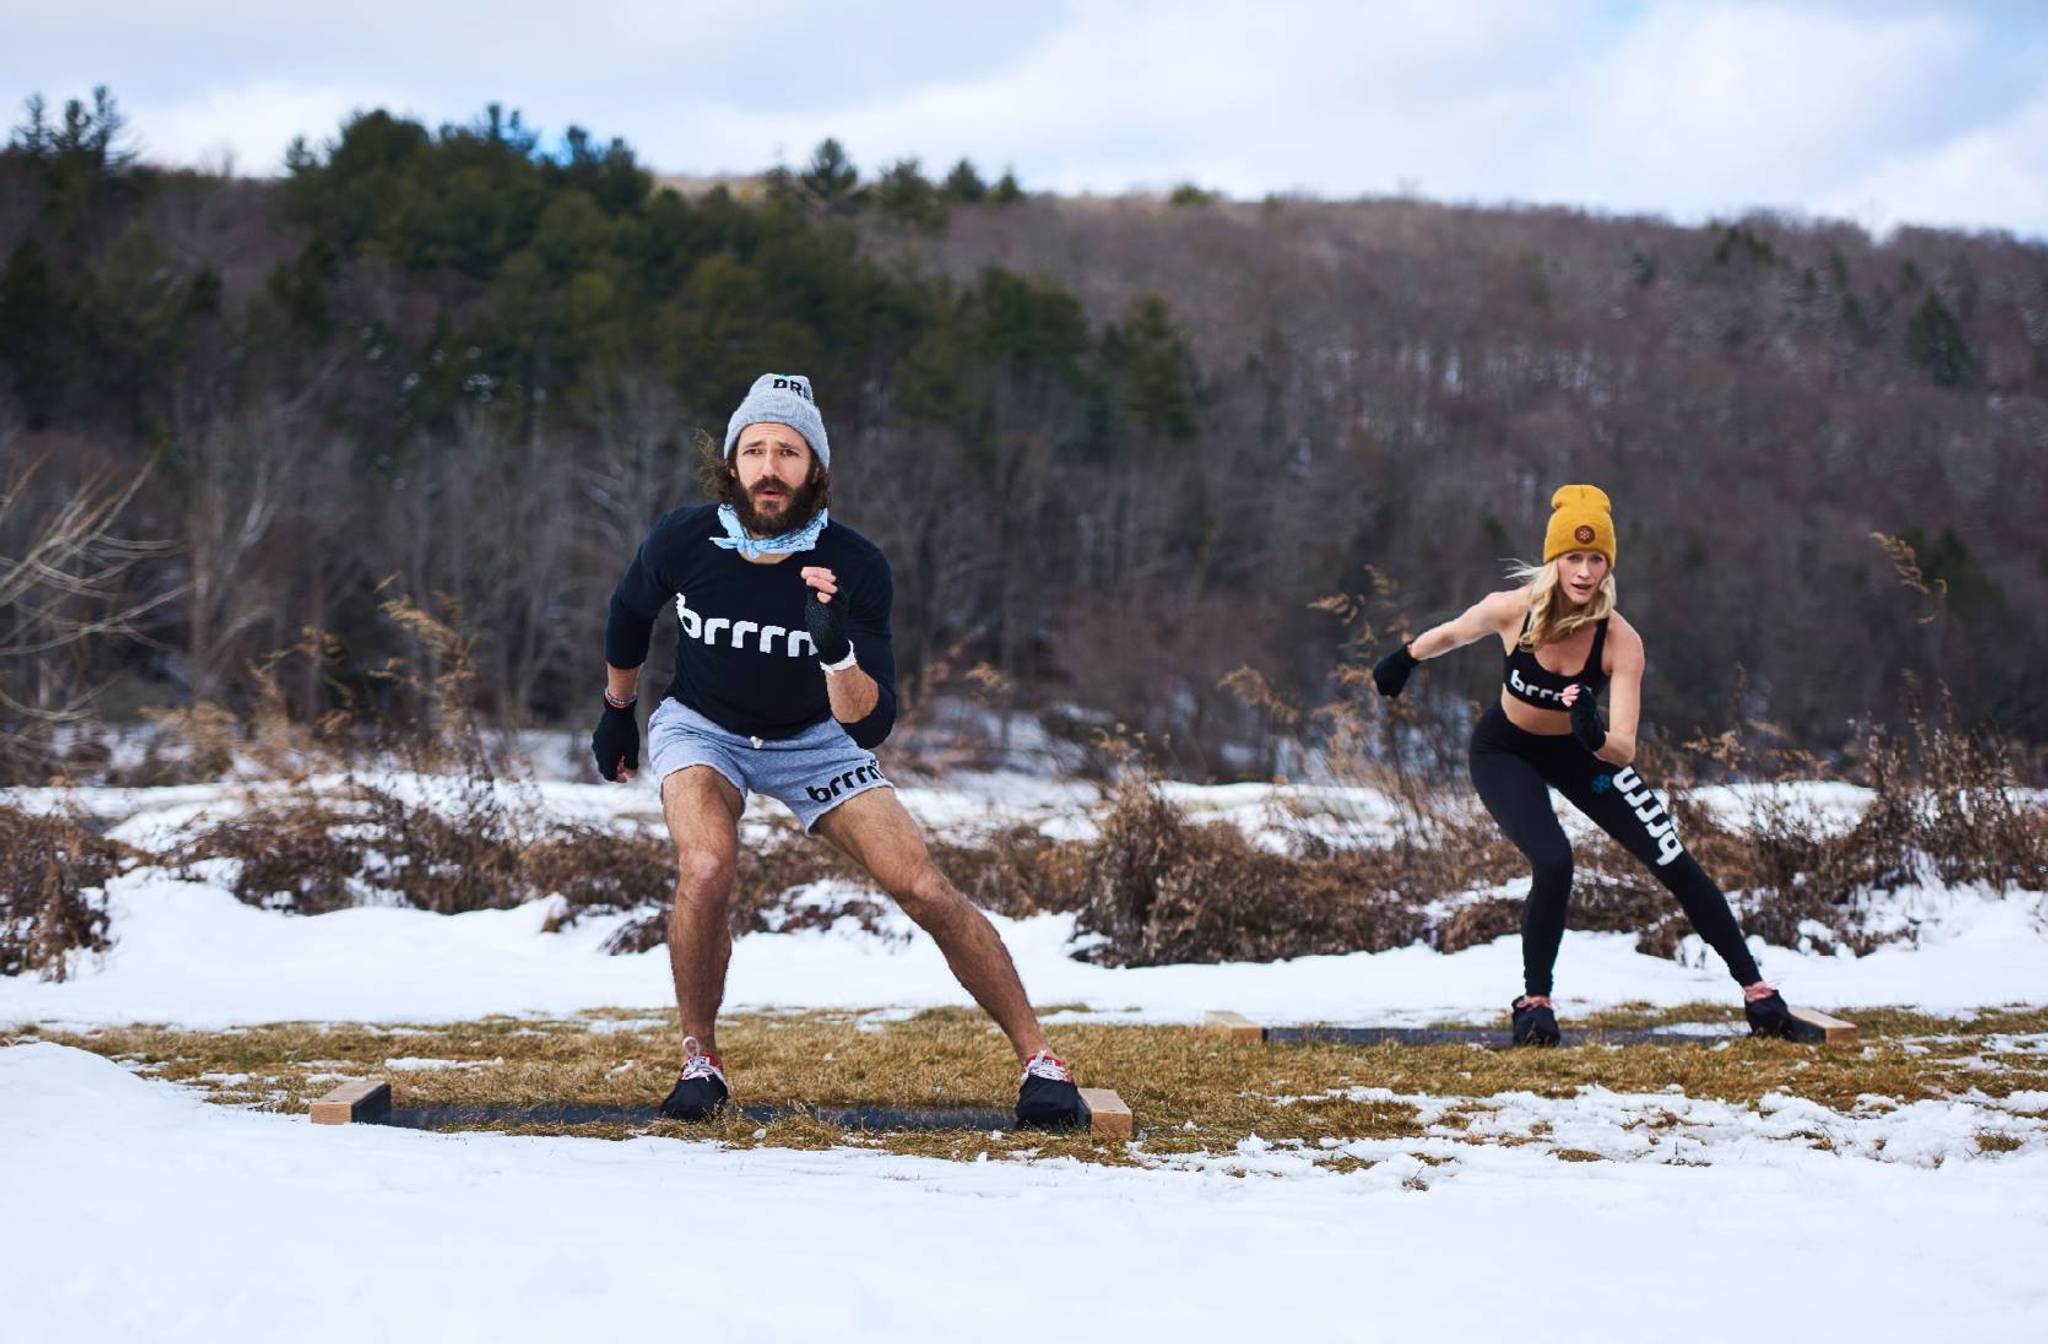 BRRRN: frigid fitness for novelty-seeking New Yorkers